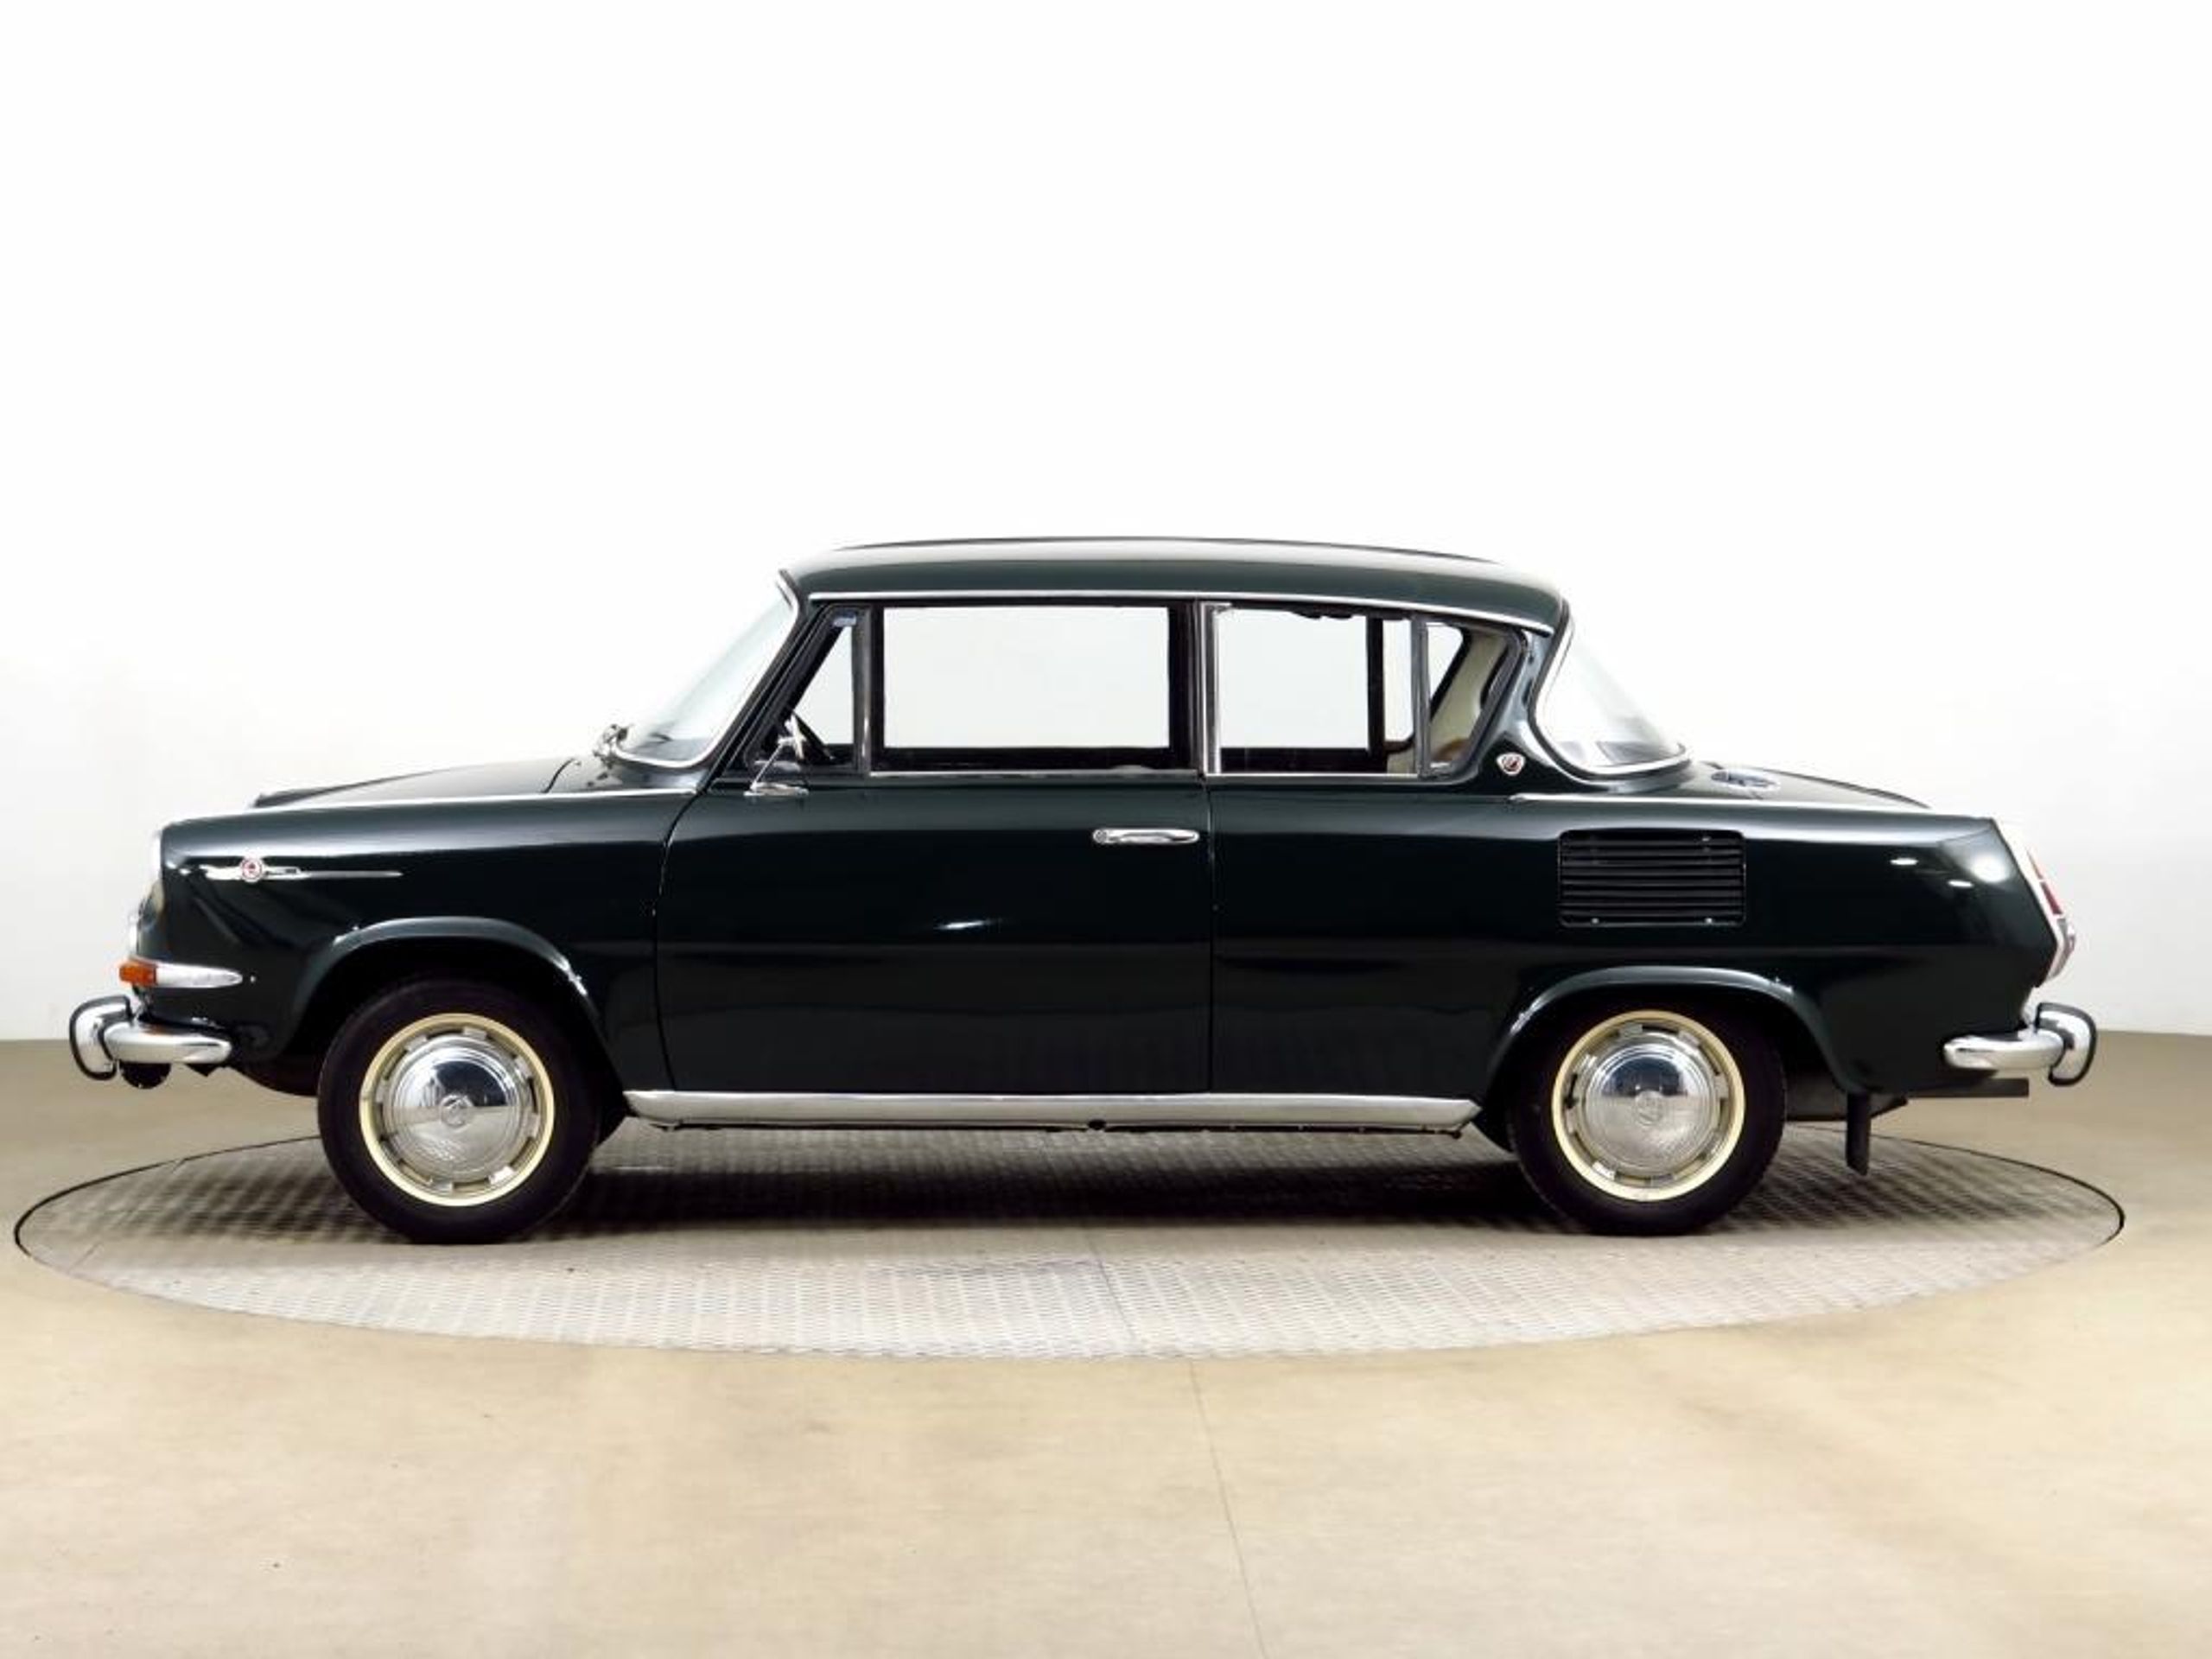 Škoda 1000 MBX z roku 1967 - 11 - Fotogalerie: Tahle stařičká embéčka mají dnes obrovskou hodnotu (19/35)